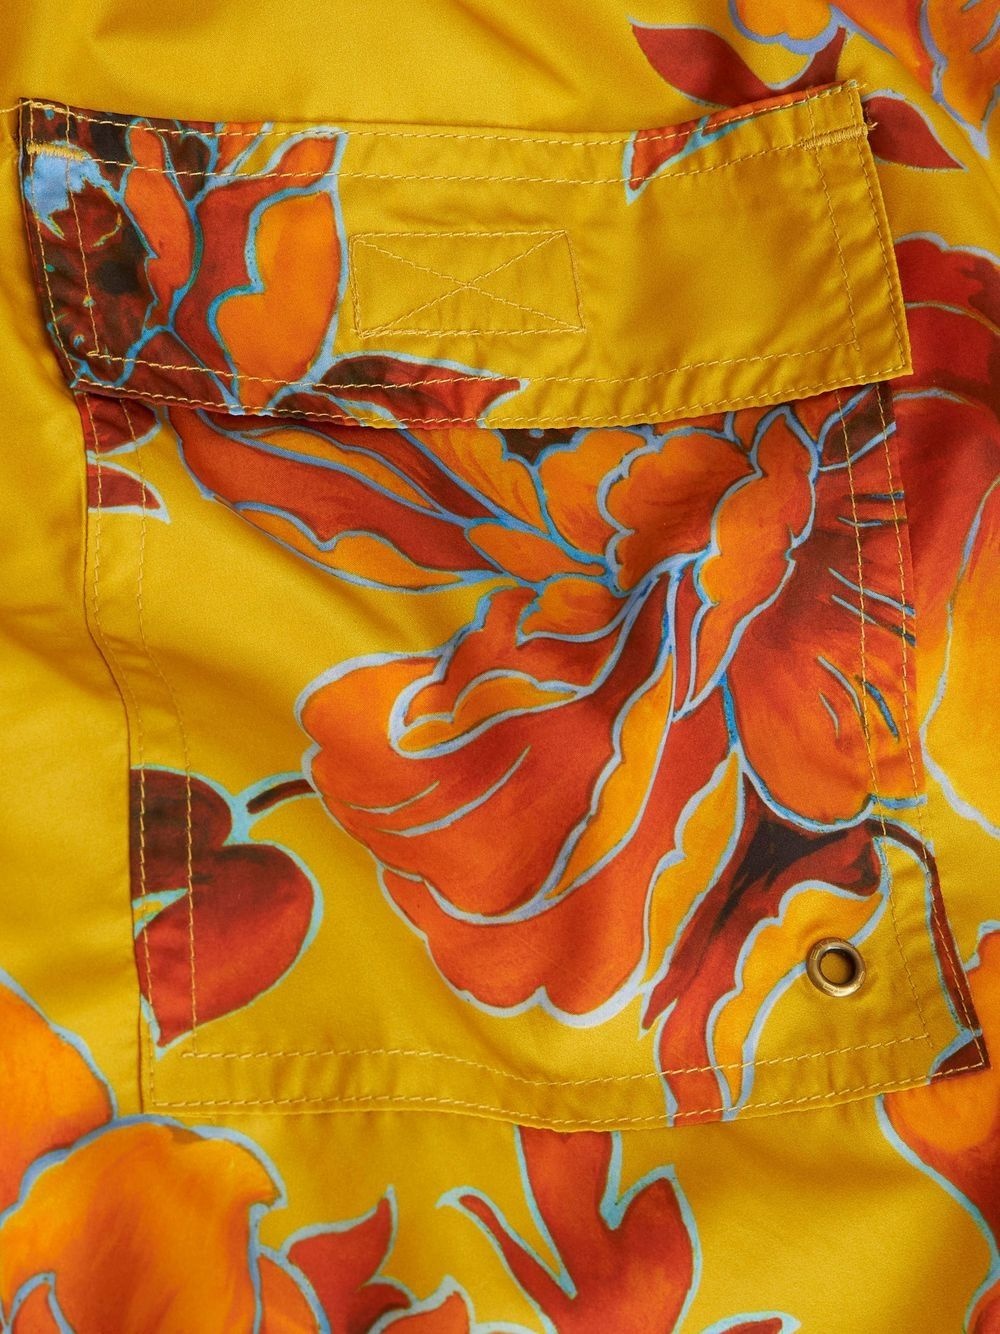 floral-print swim shorts - 5